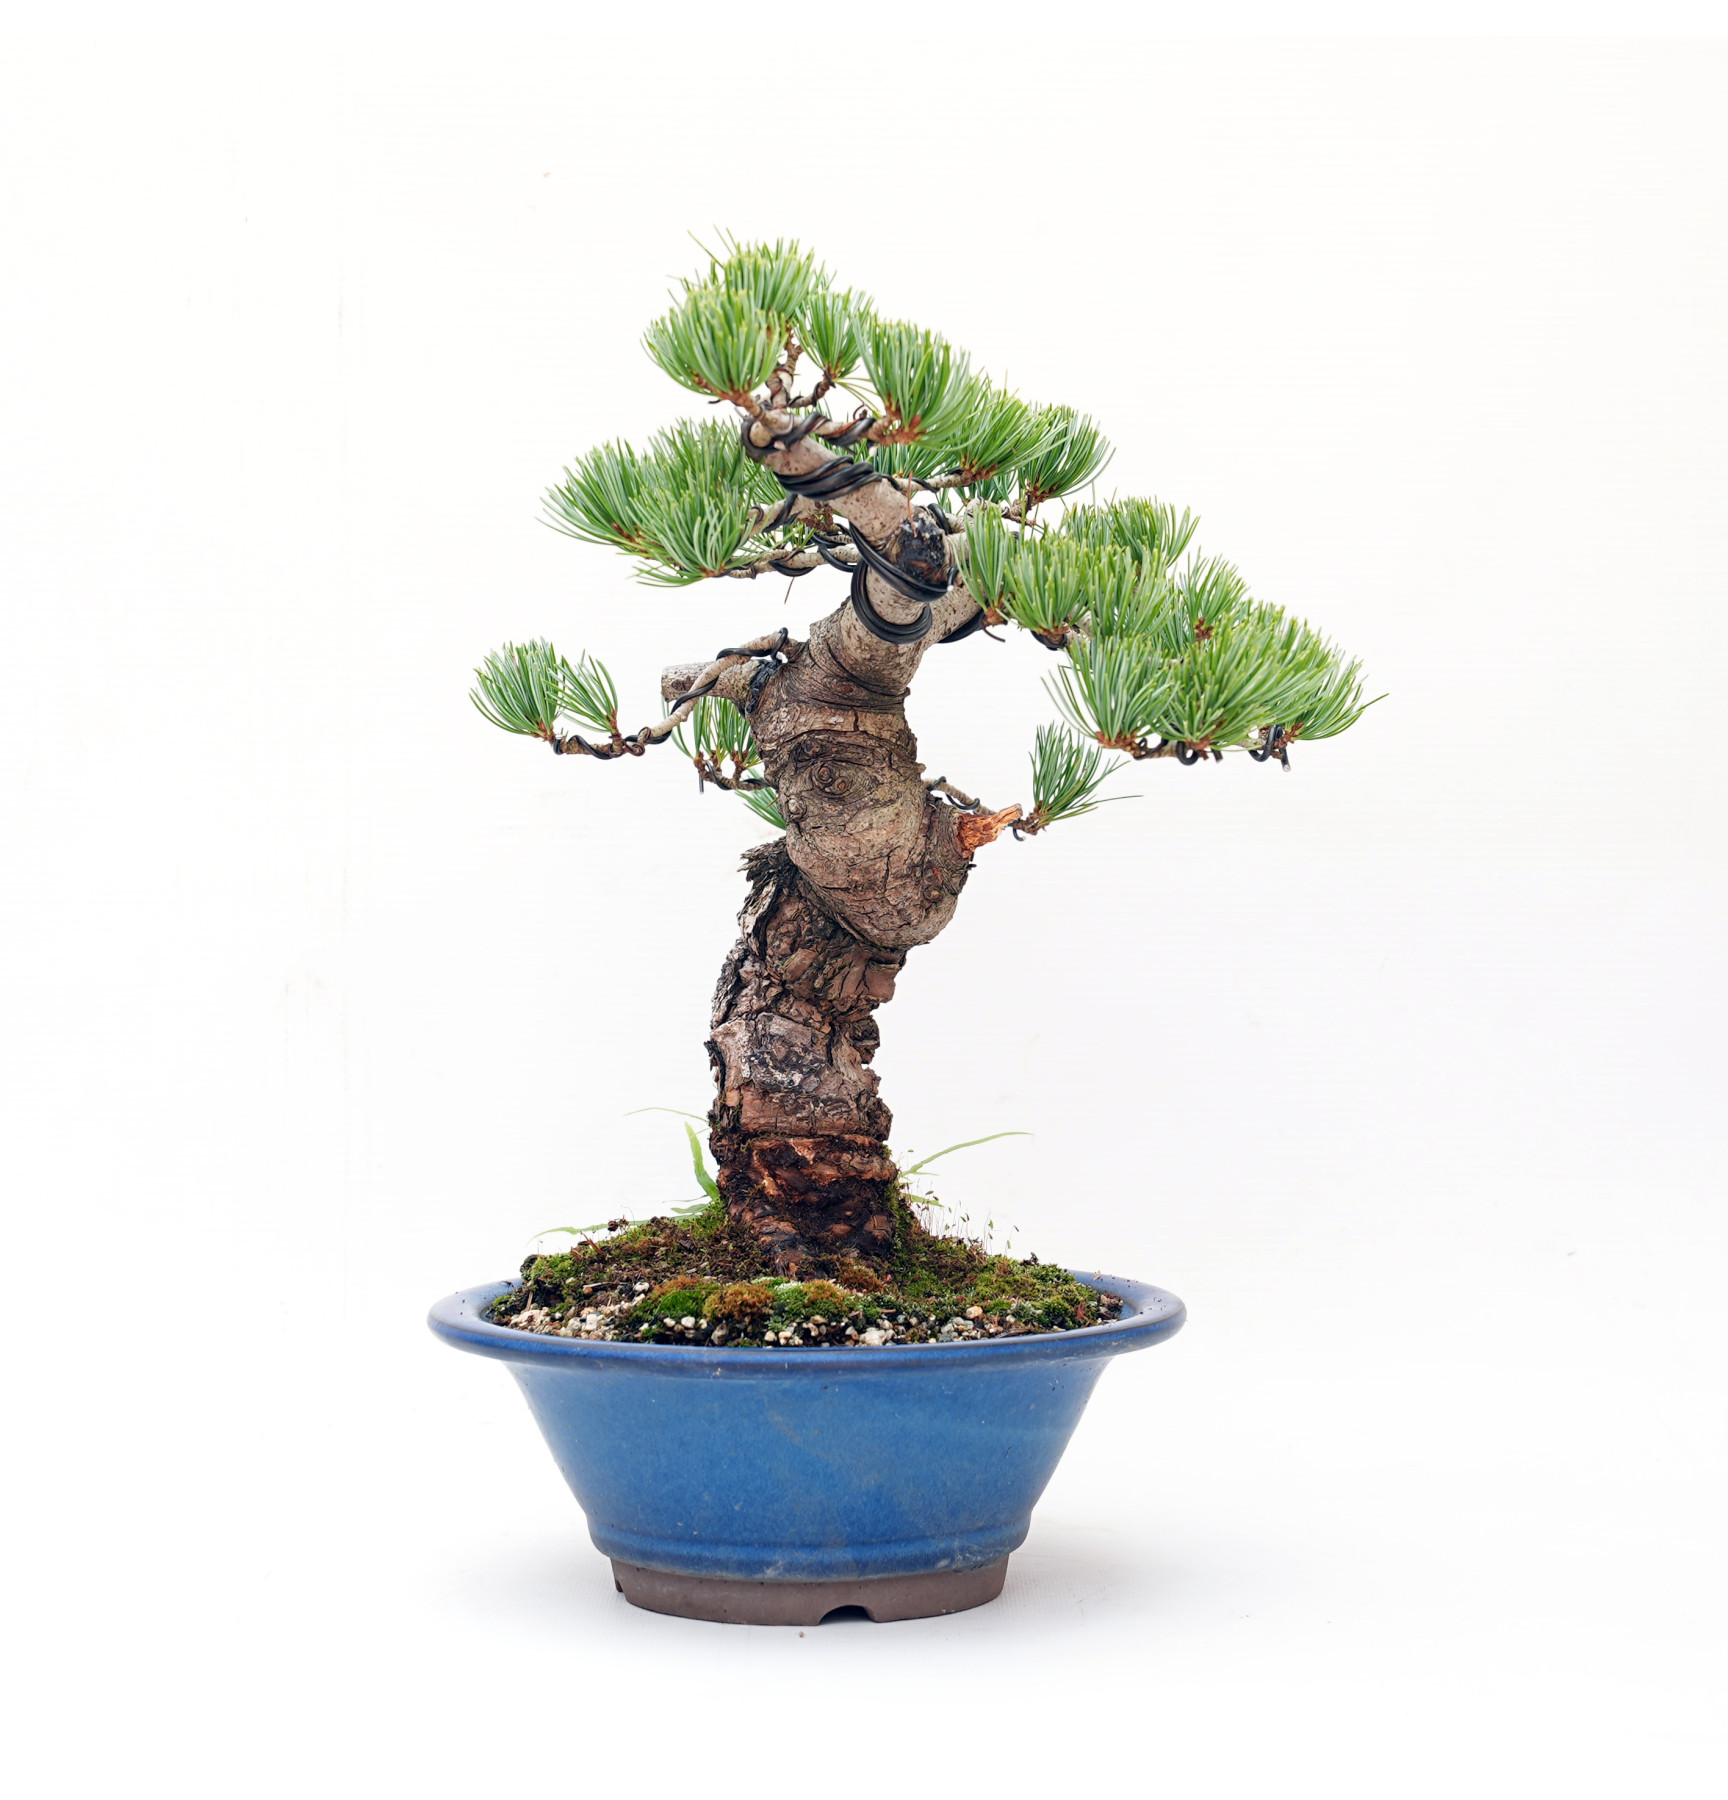 Pinus pentaphylla